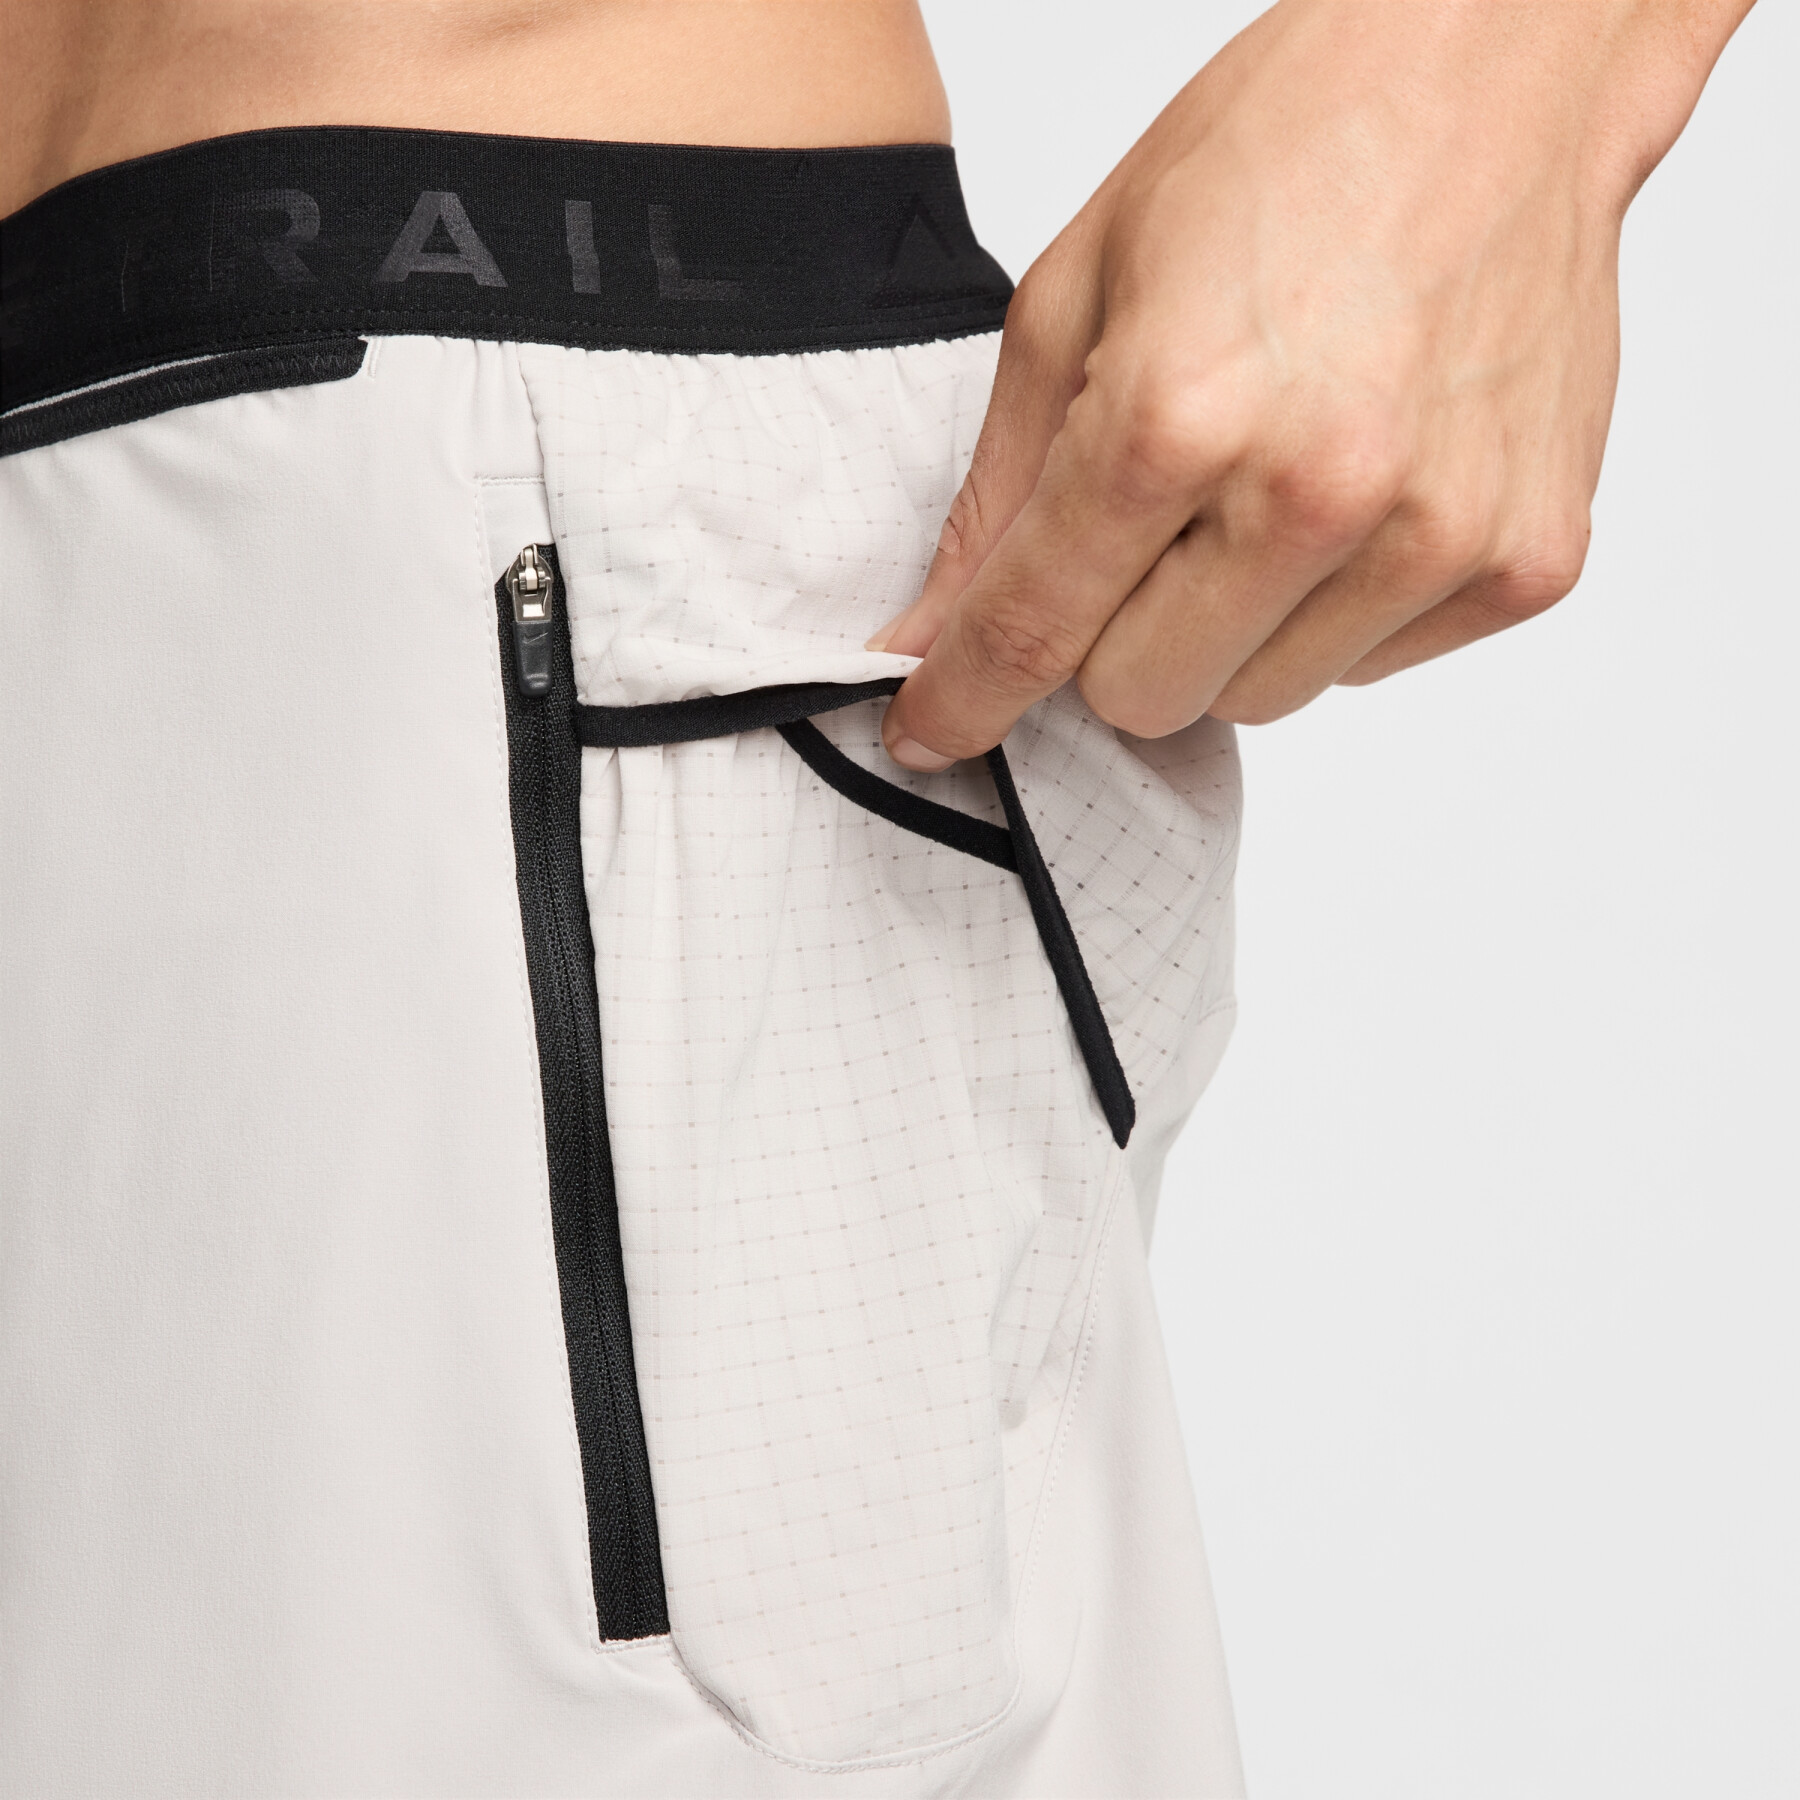 Pantalones cortos con calzoncillos integrados Nike Second Sunrise Dri-FIT